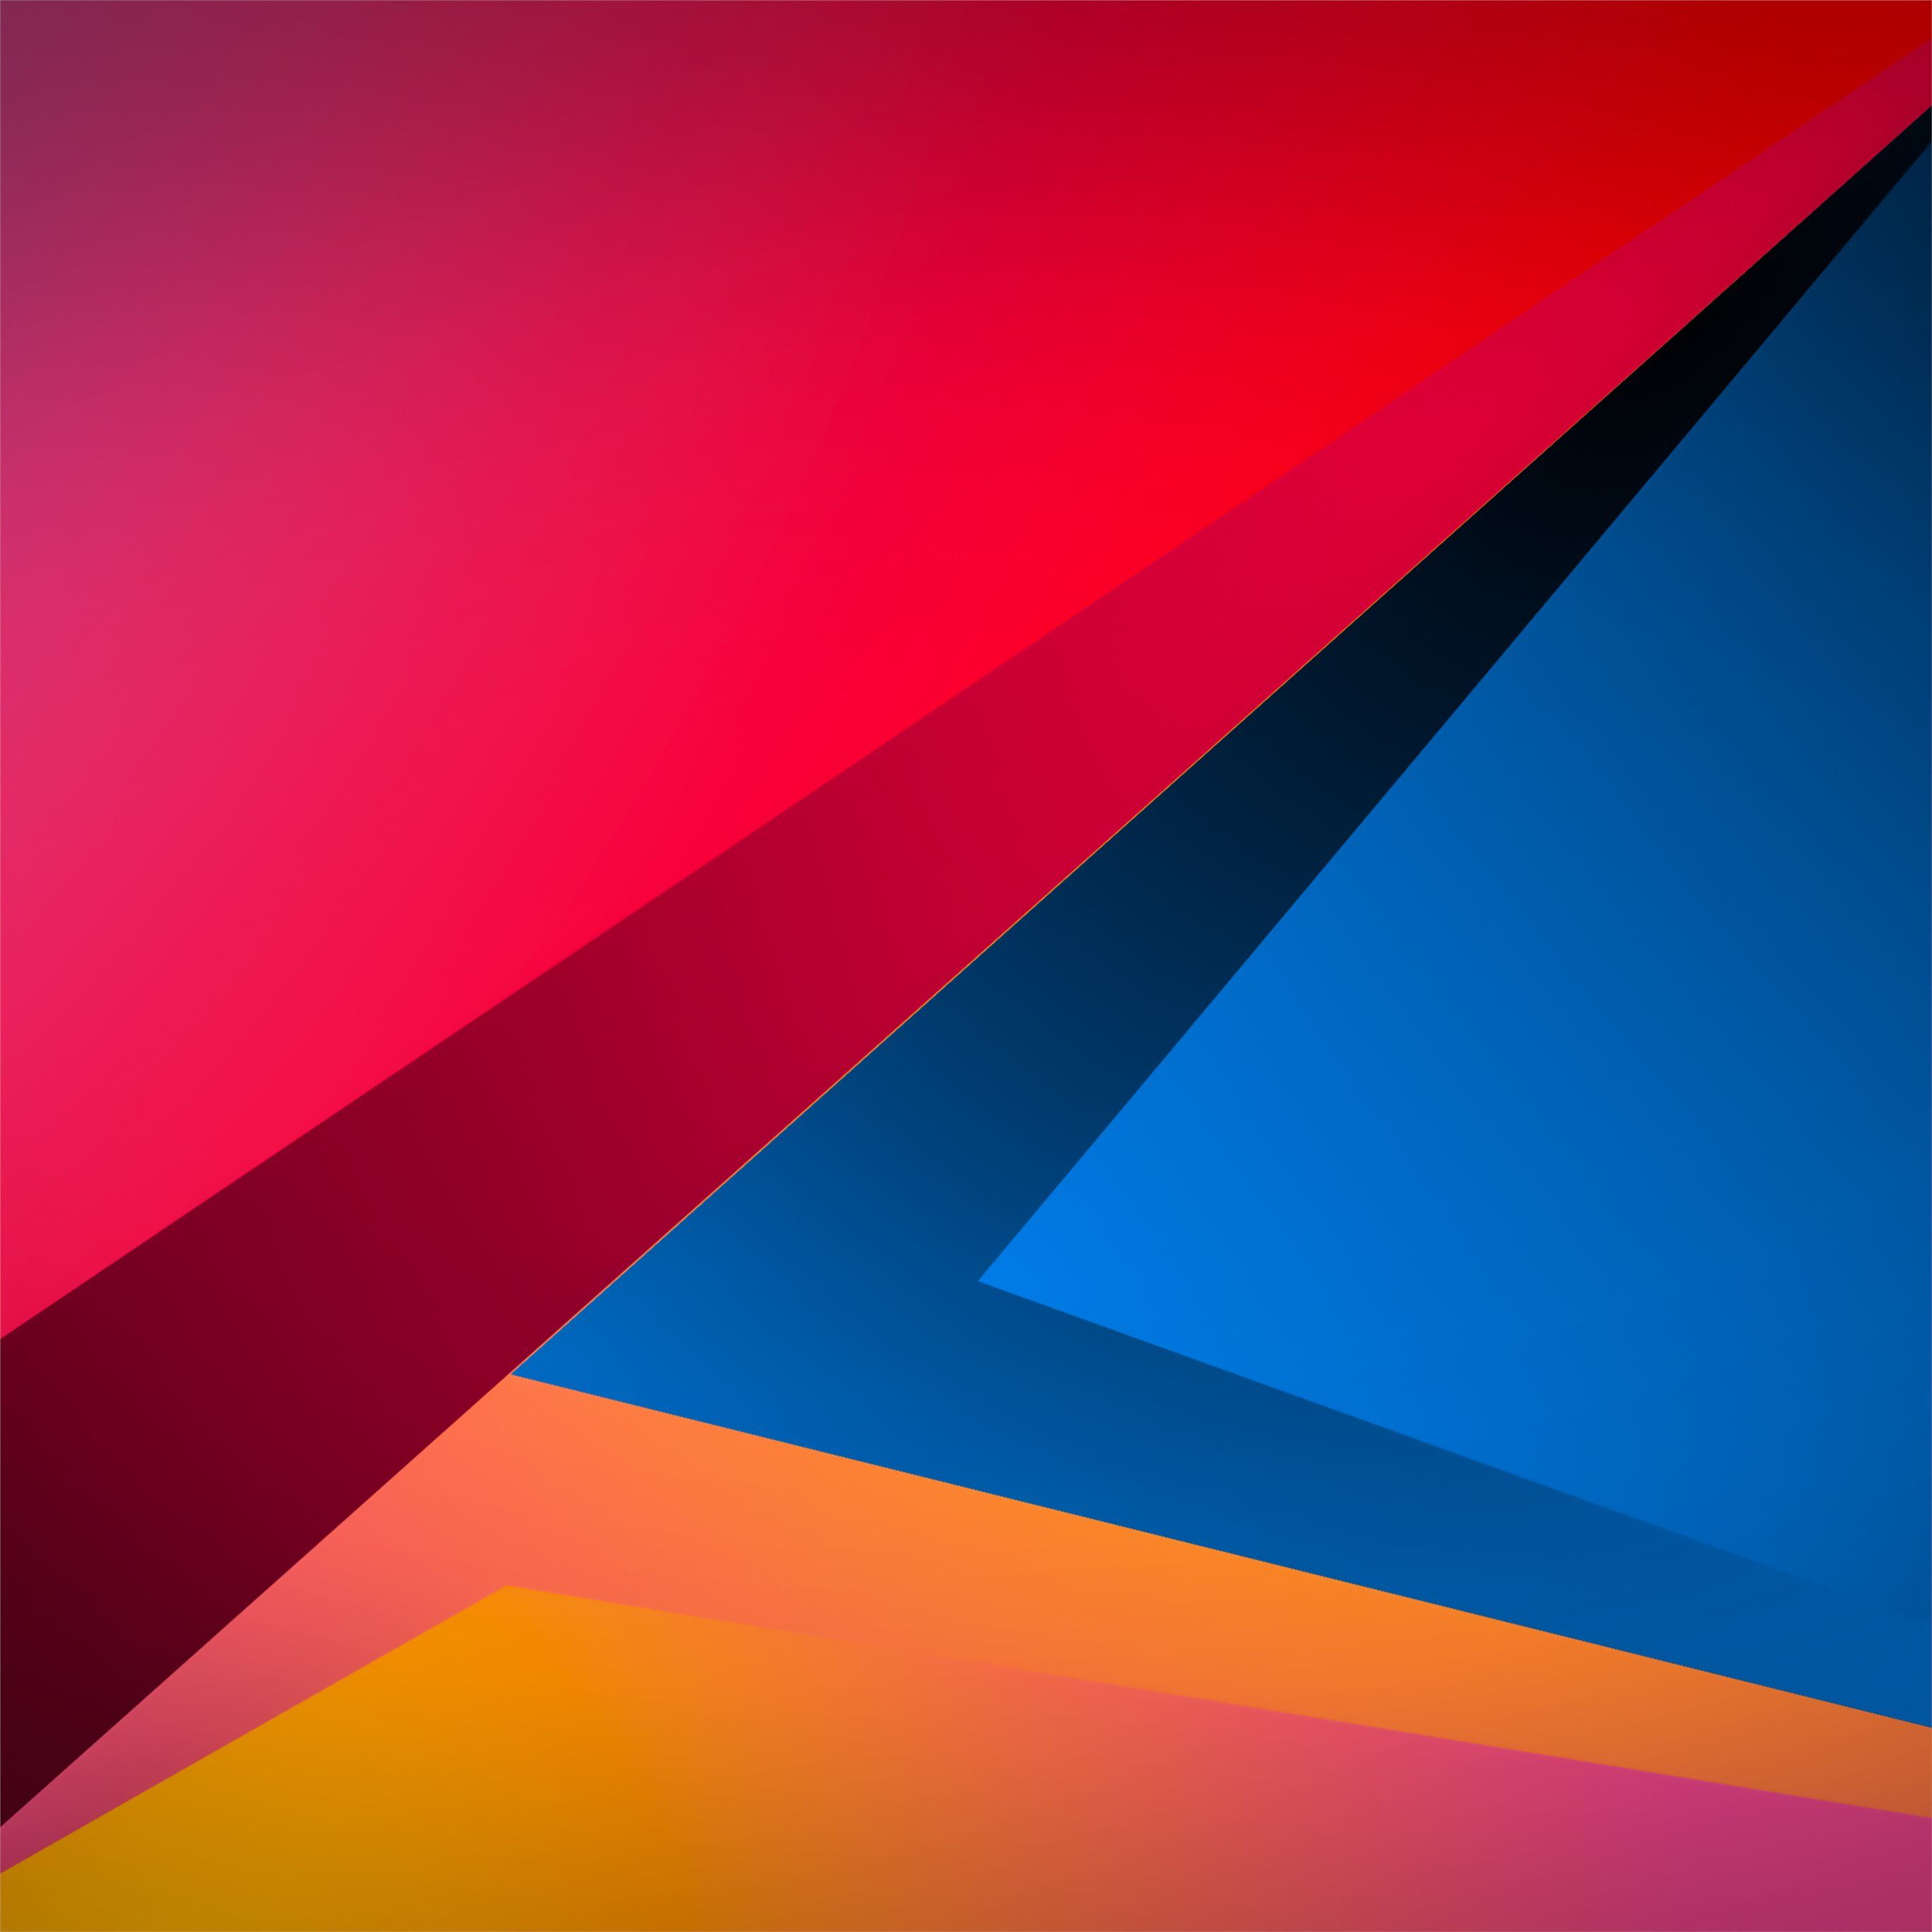 minimal shapes sharp 4k iPad Pro Wallpaper Free Download